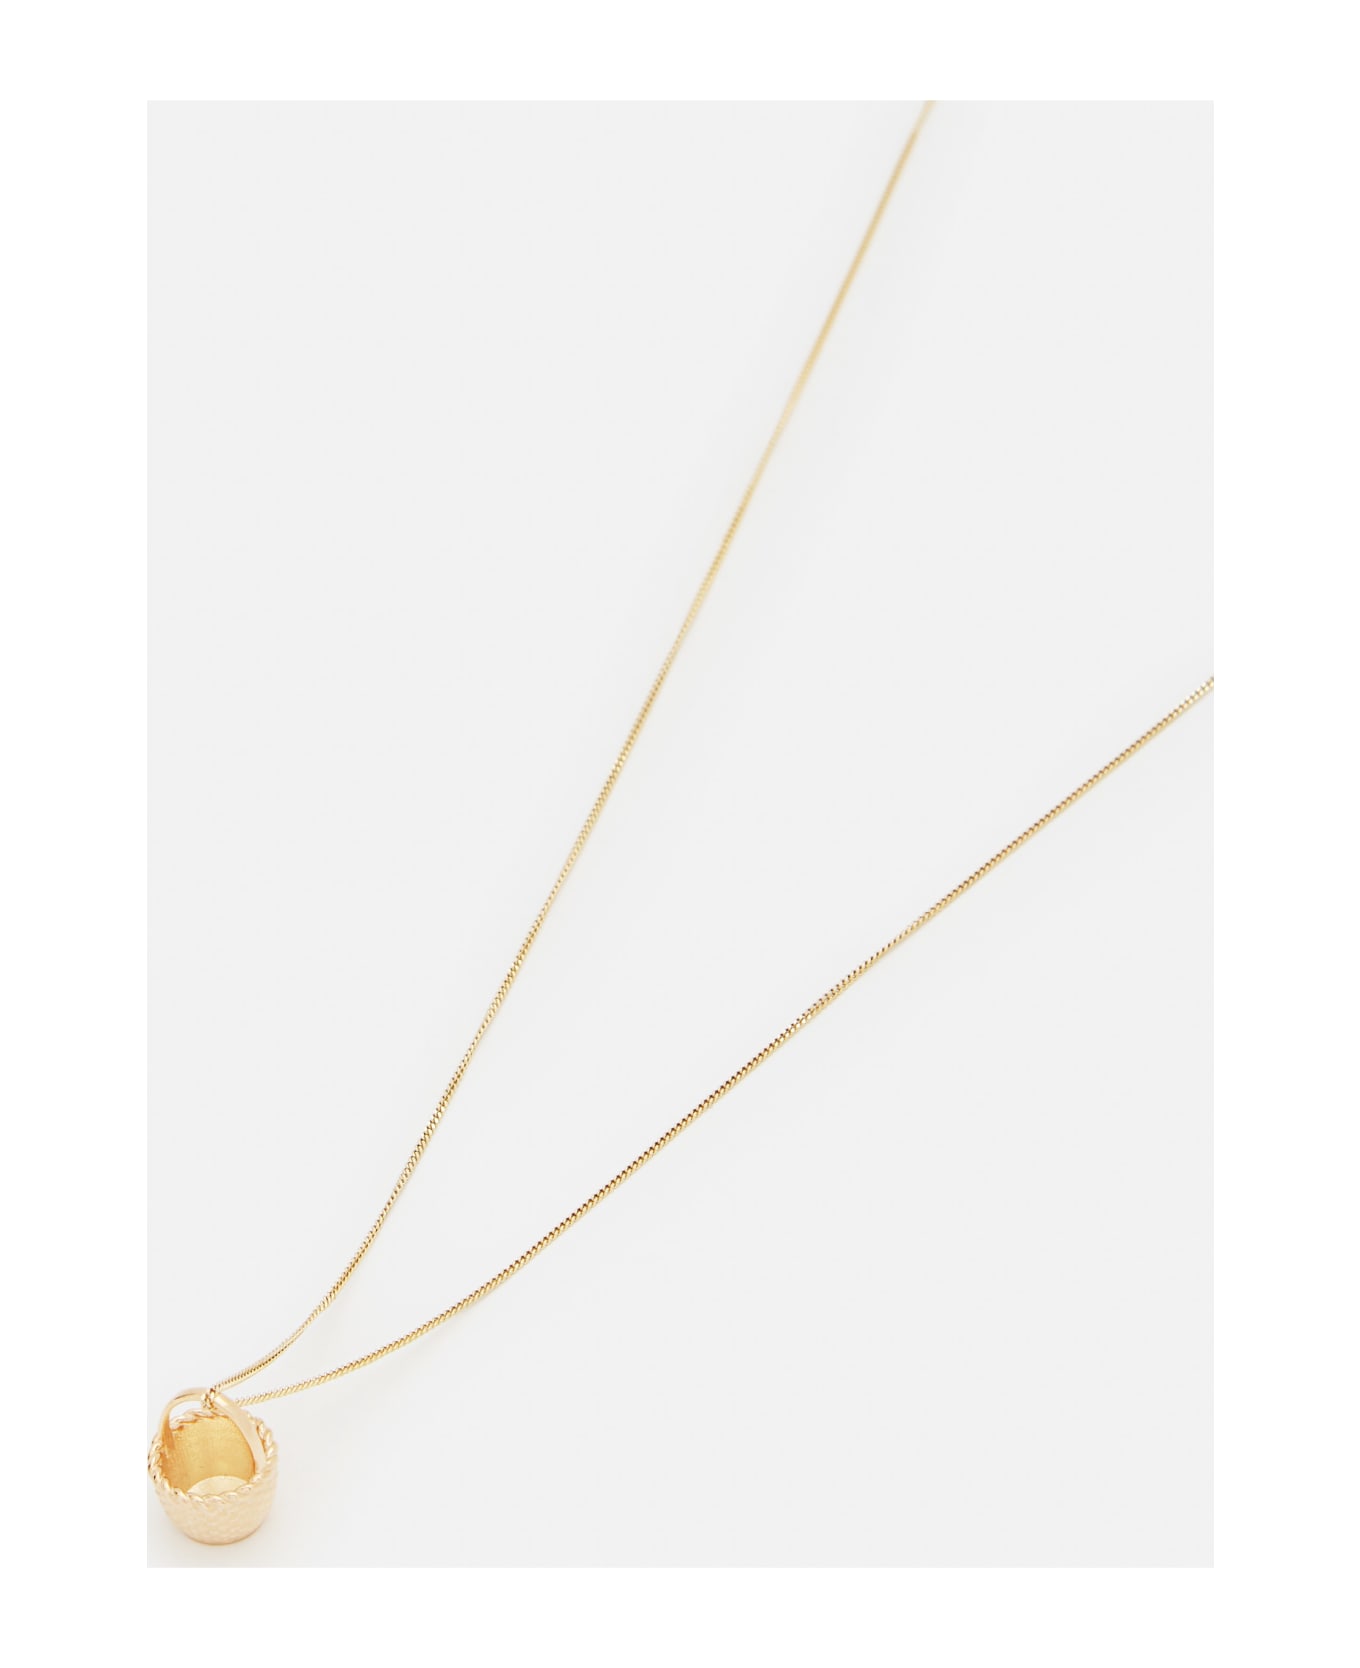 Aliita 9k Gold Picnic Necklace - Golden